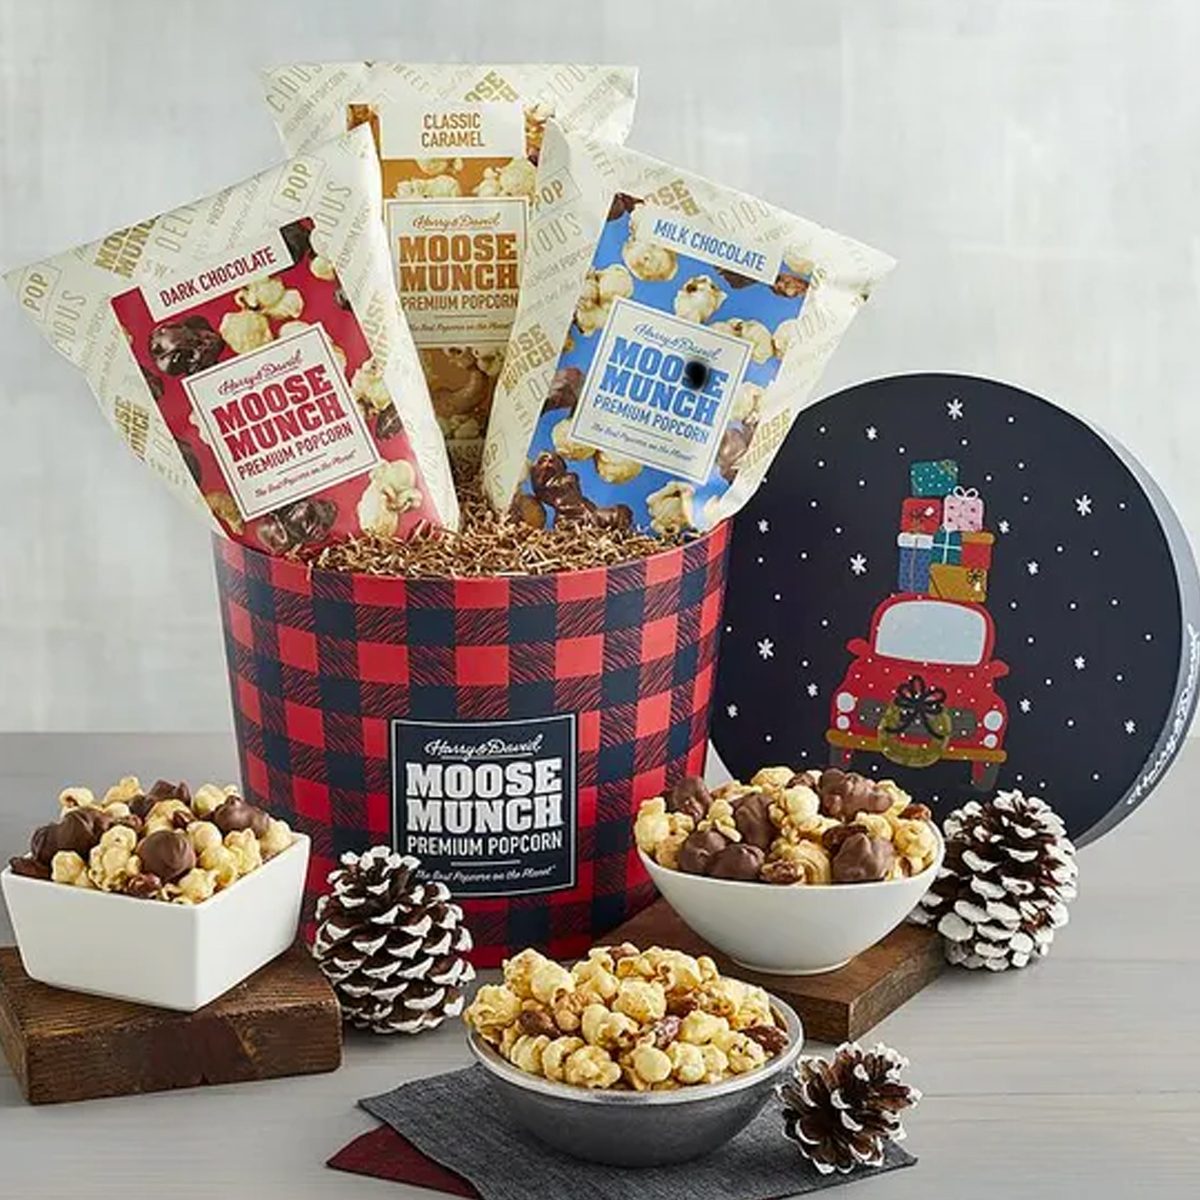 Moose Munch® Premium Popcorn Holiday Drum Ecomm Harryanddavid.com